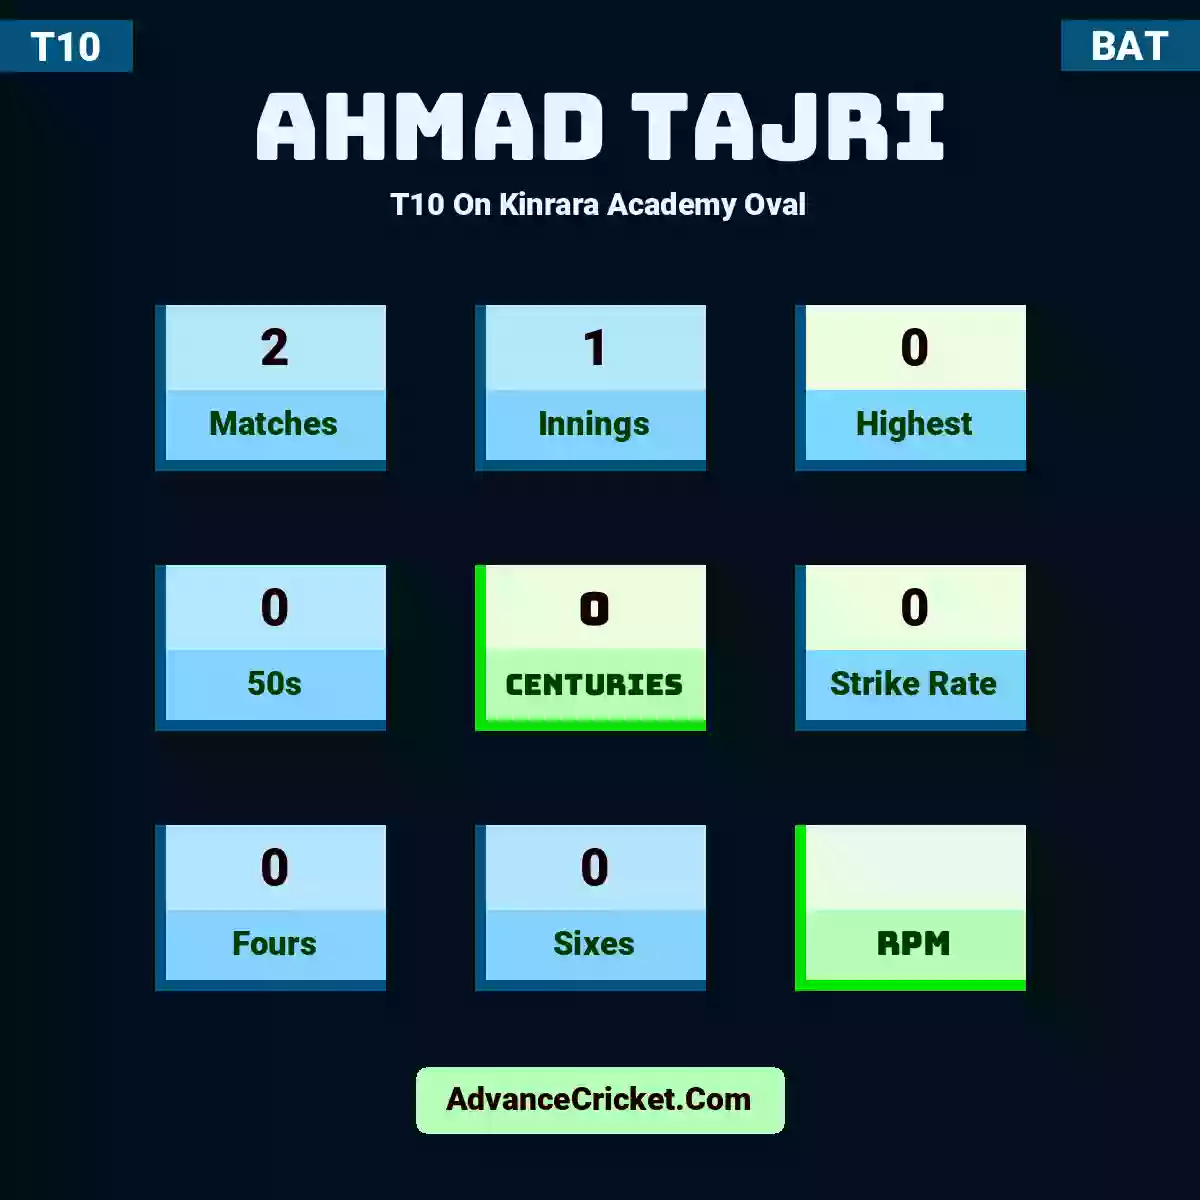 Ahmad Tajri T10  On Kinrara Academy Oval, Ahmad Tajri played 2 matches, scored 0 runs as highest, 0 half-centuries, and 0 centuries, with a strike rate of 0. A.Tajri hit 0 fours and 0 sixes.